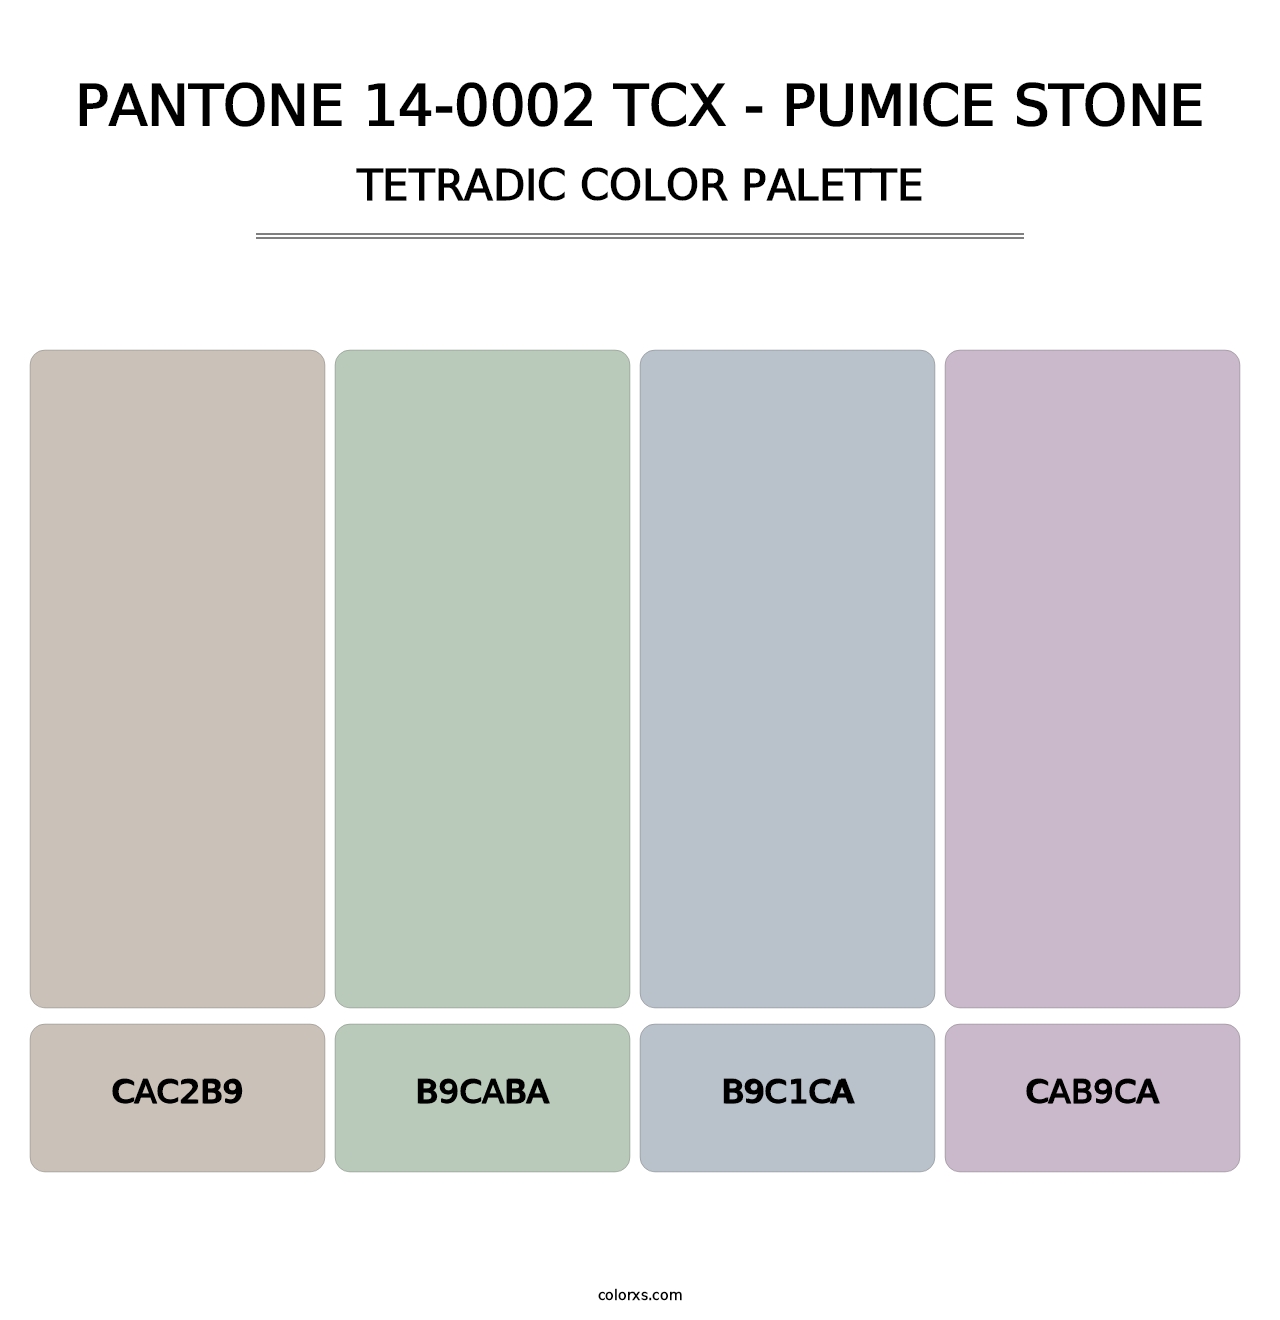 PANTONE 14-0002 TCX - Pumice Stone - Tetradic Color Palette